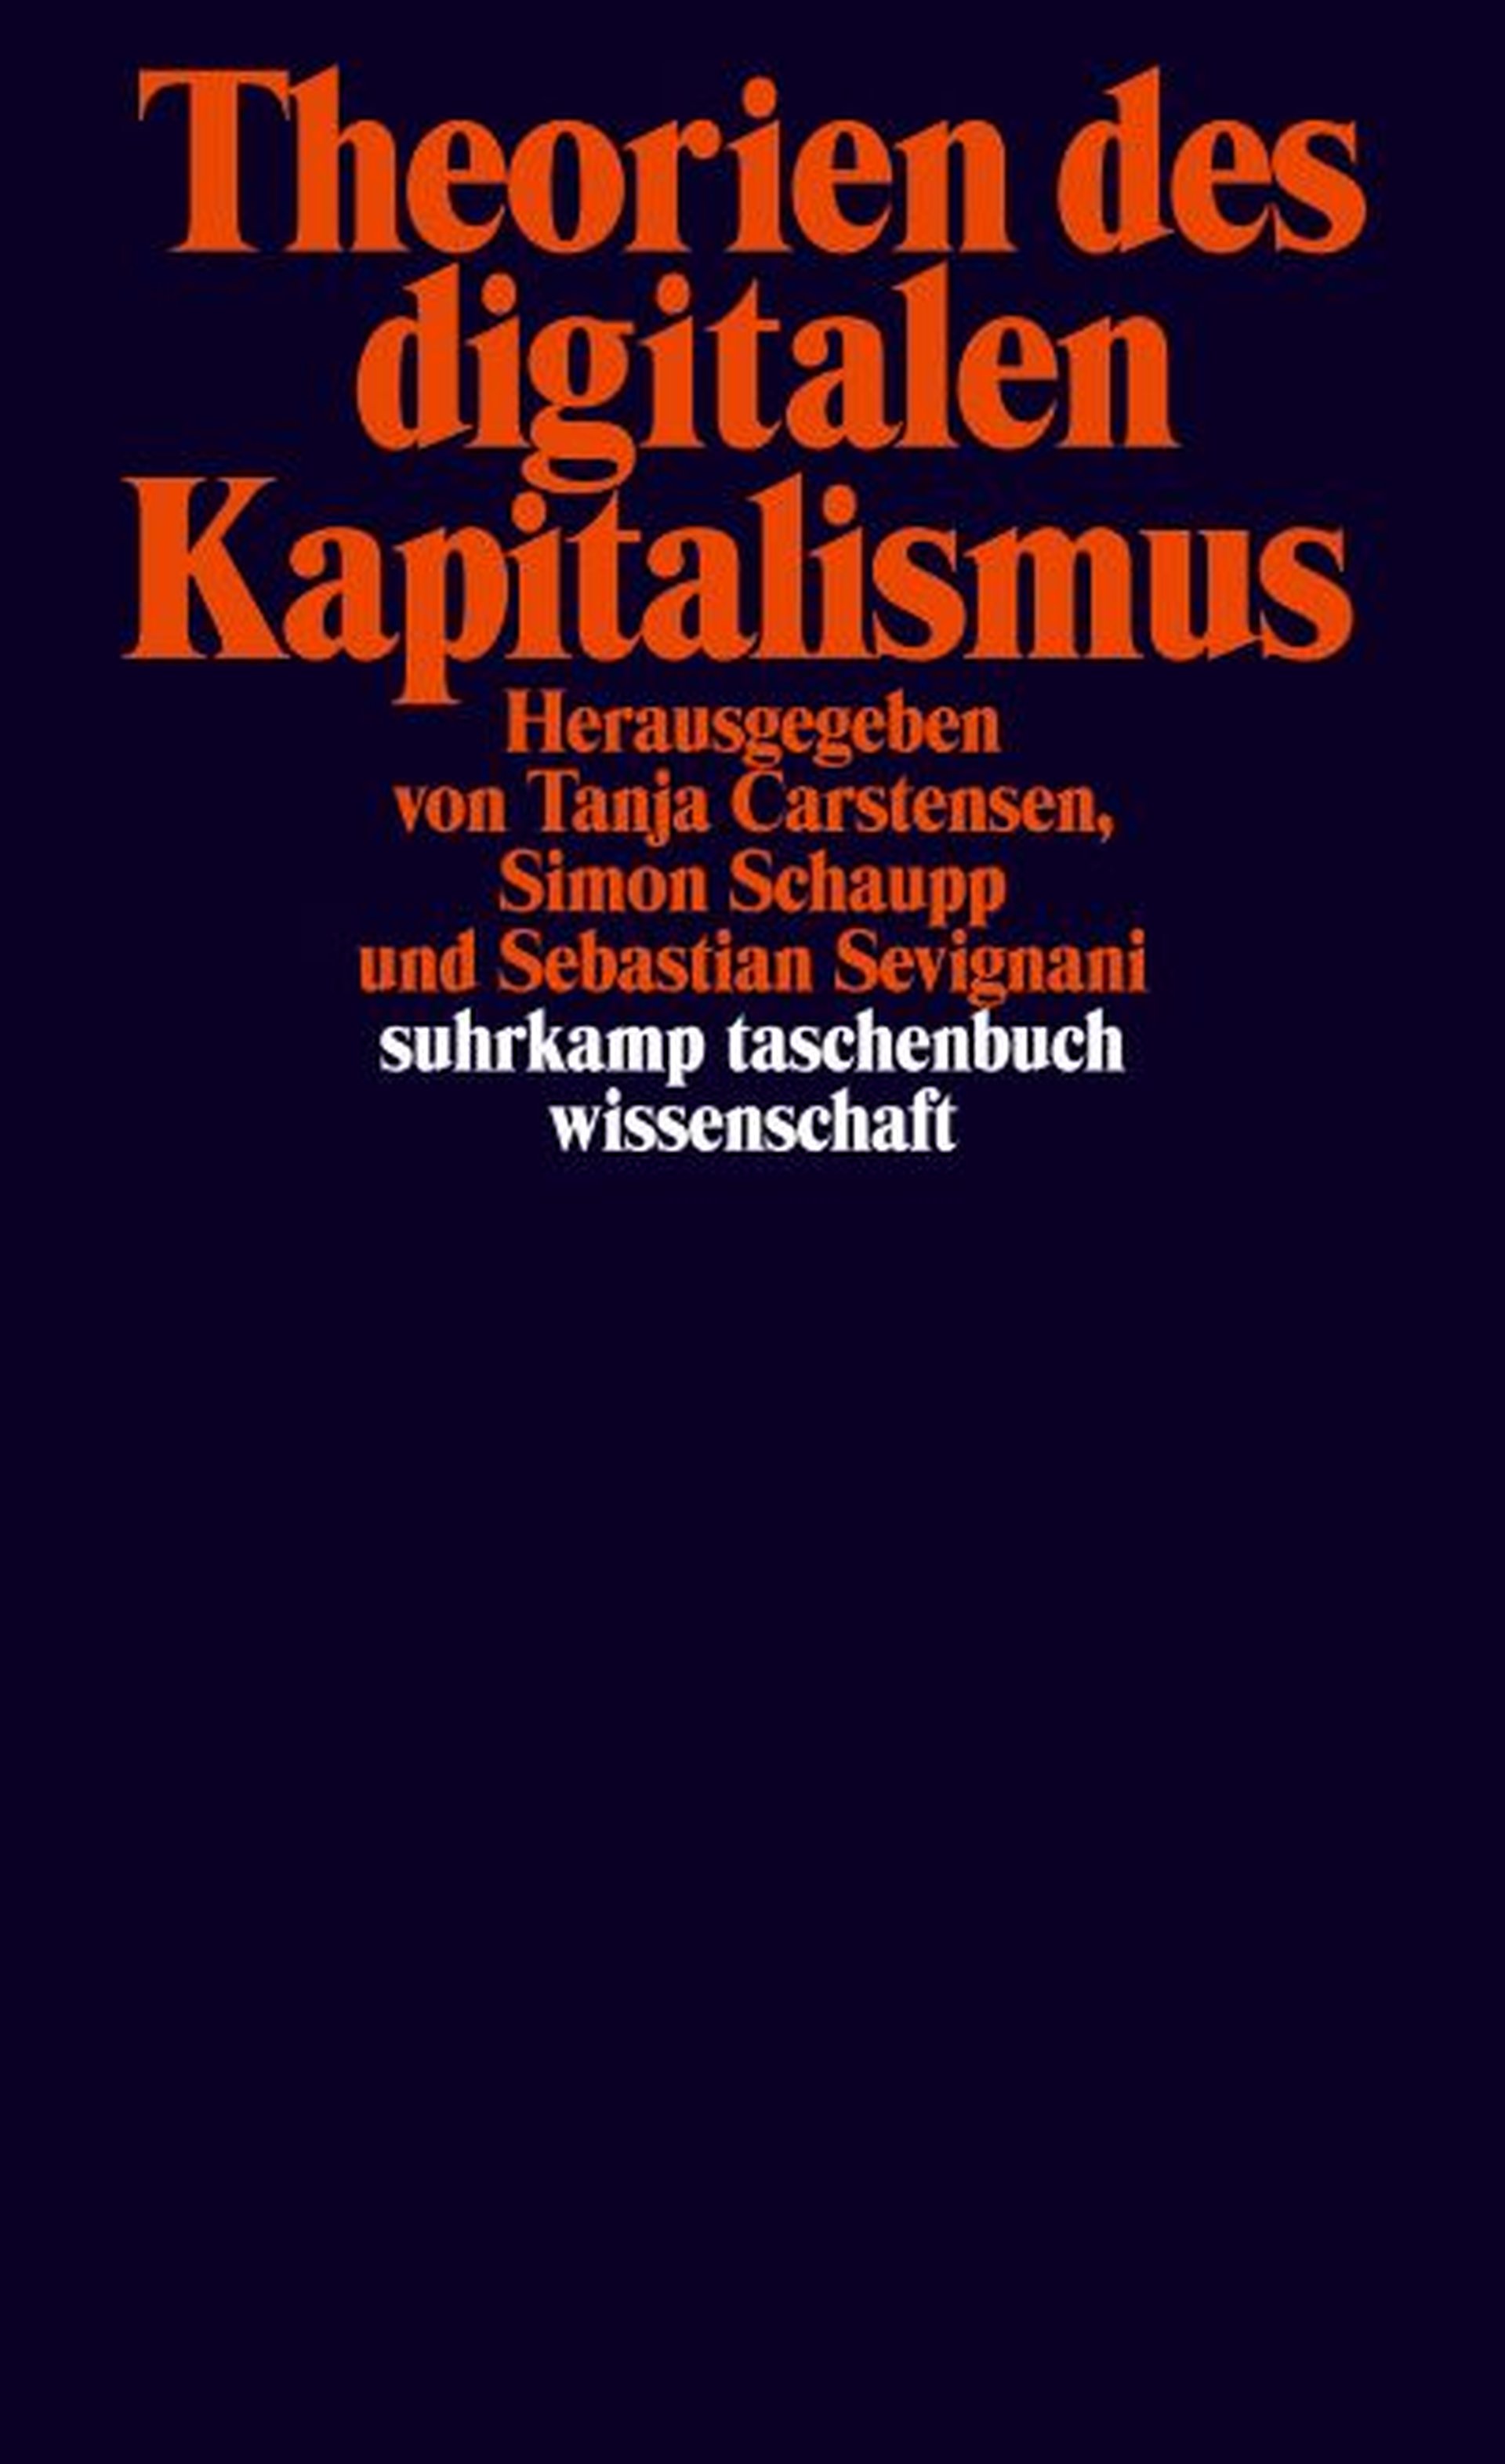 Cover digitaler Kapitalismus